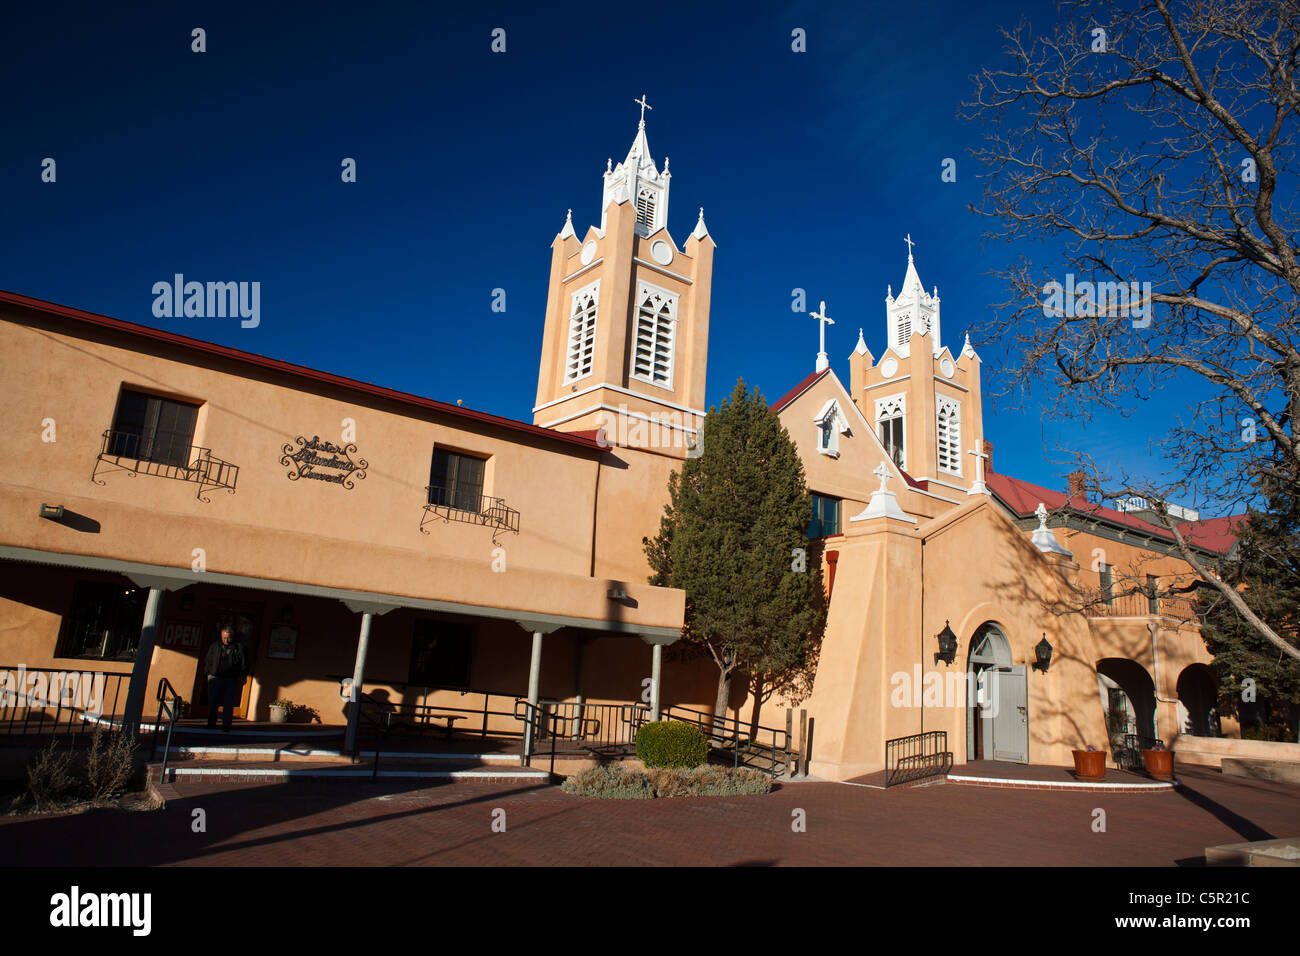 Exterior of San Felipe de Neri Church, Albuquerque, New Mexico, United States of America Stock Photo